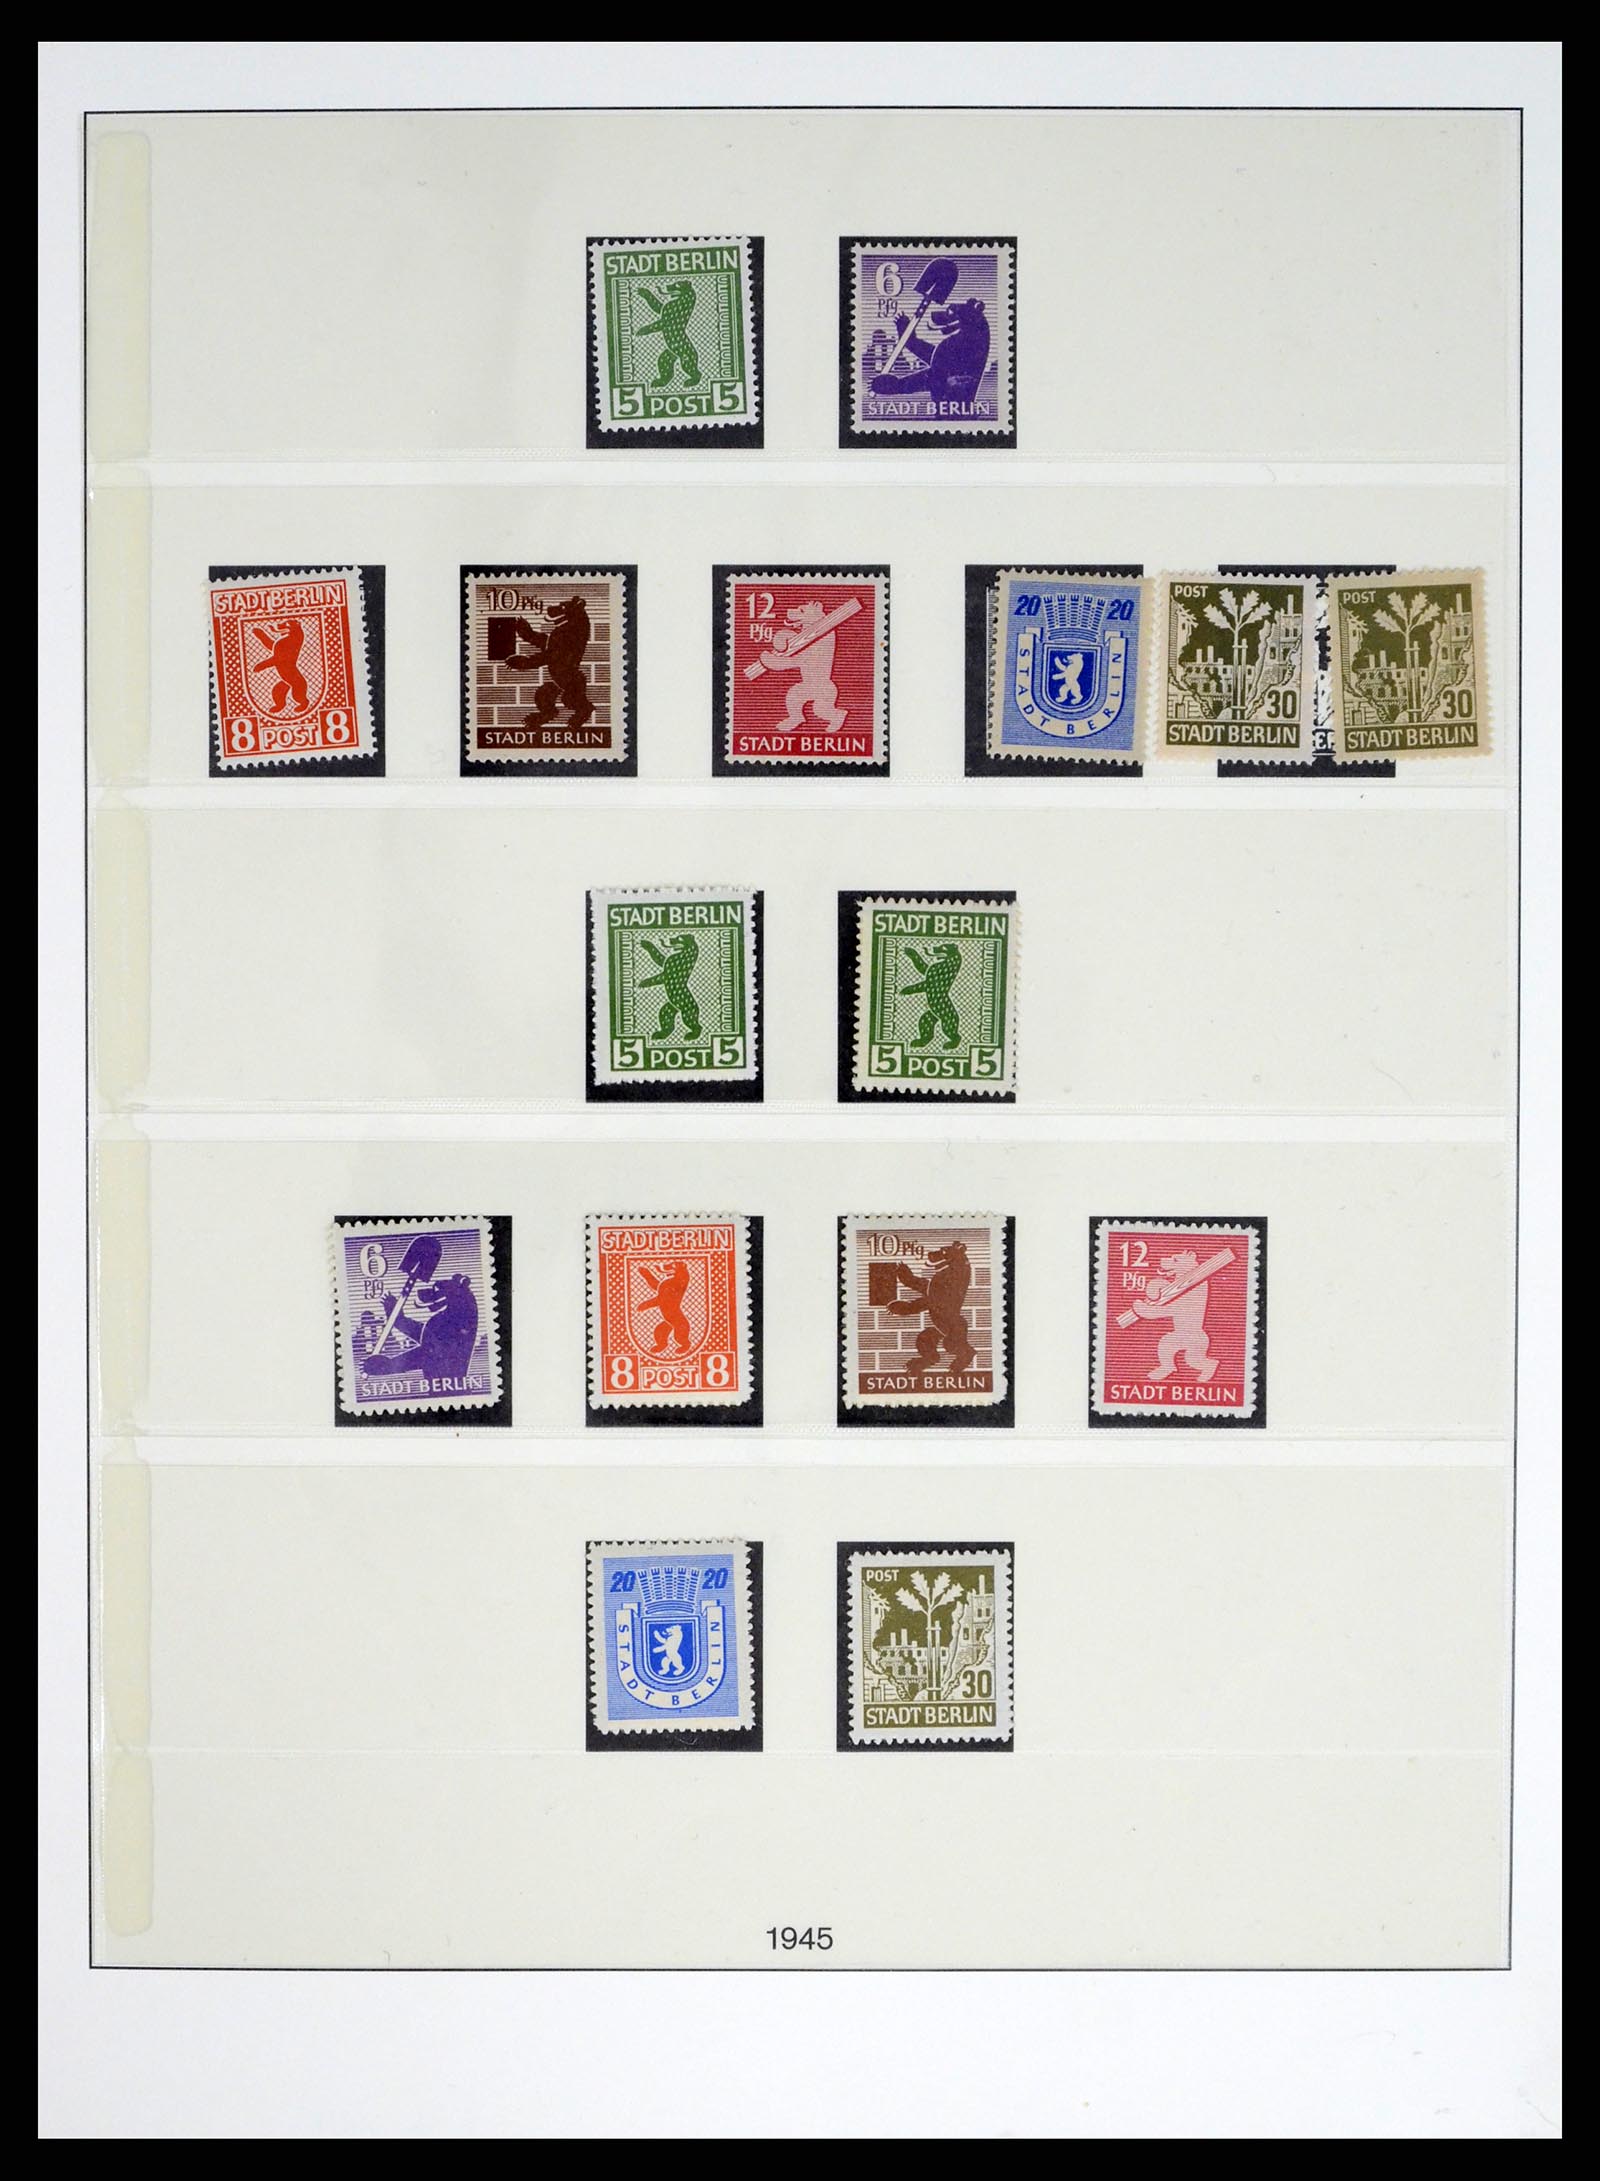 37548 001 - Stamp collection 37548 Soviet Zone 1945-1949.